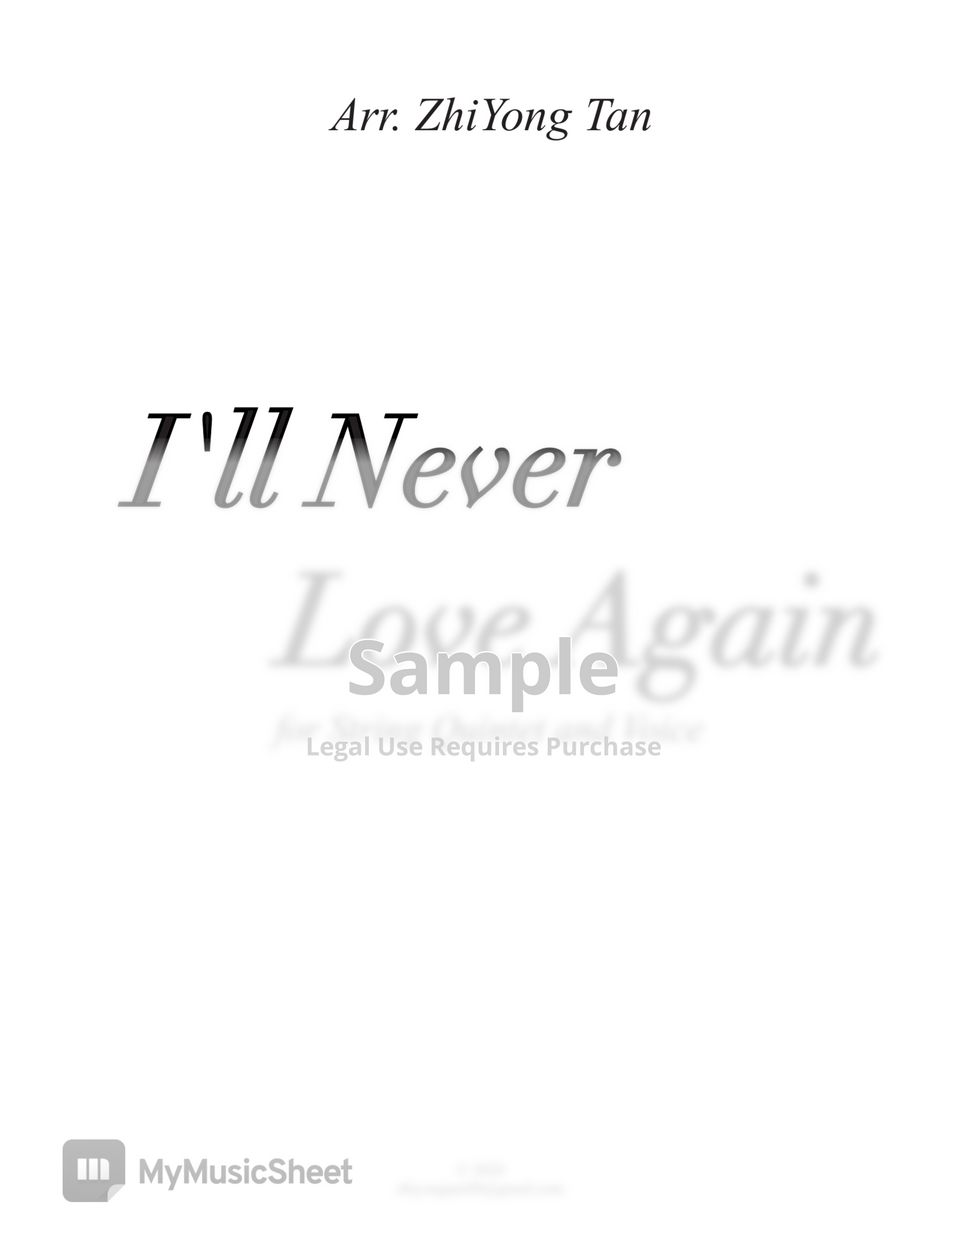 Stefani Germanotta, Natalie Hemby, Hillary Lindsey, Aaron Raitiere - I'll Never Love Again by ZhiYong Tan